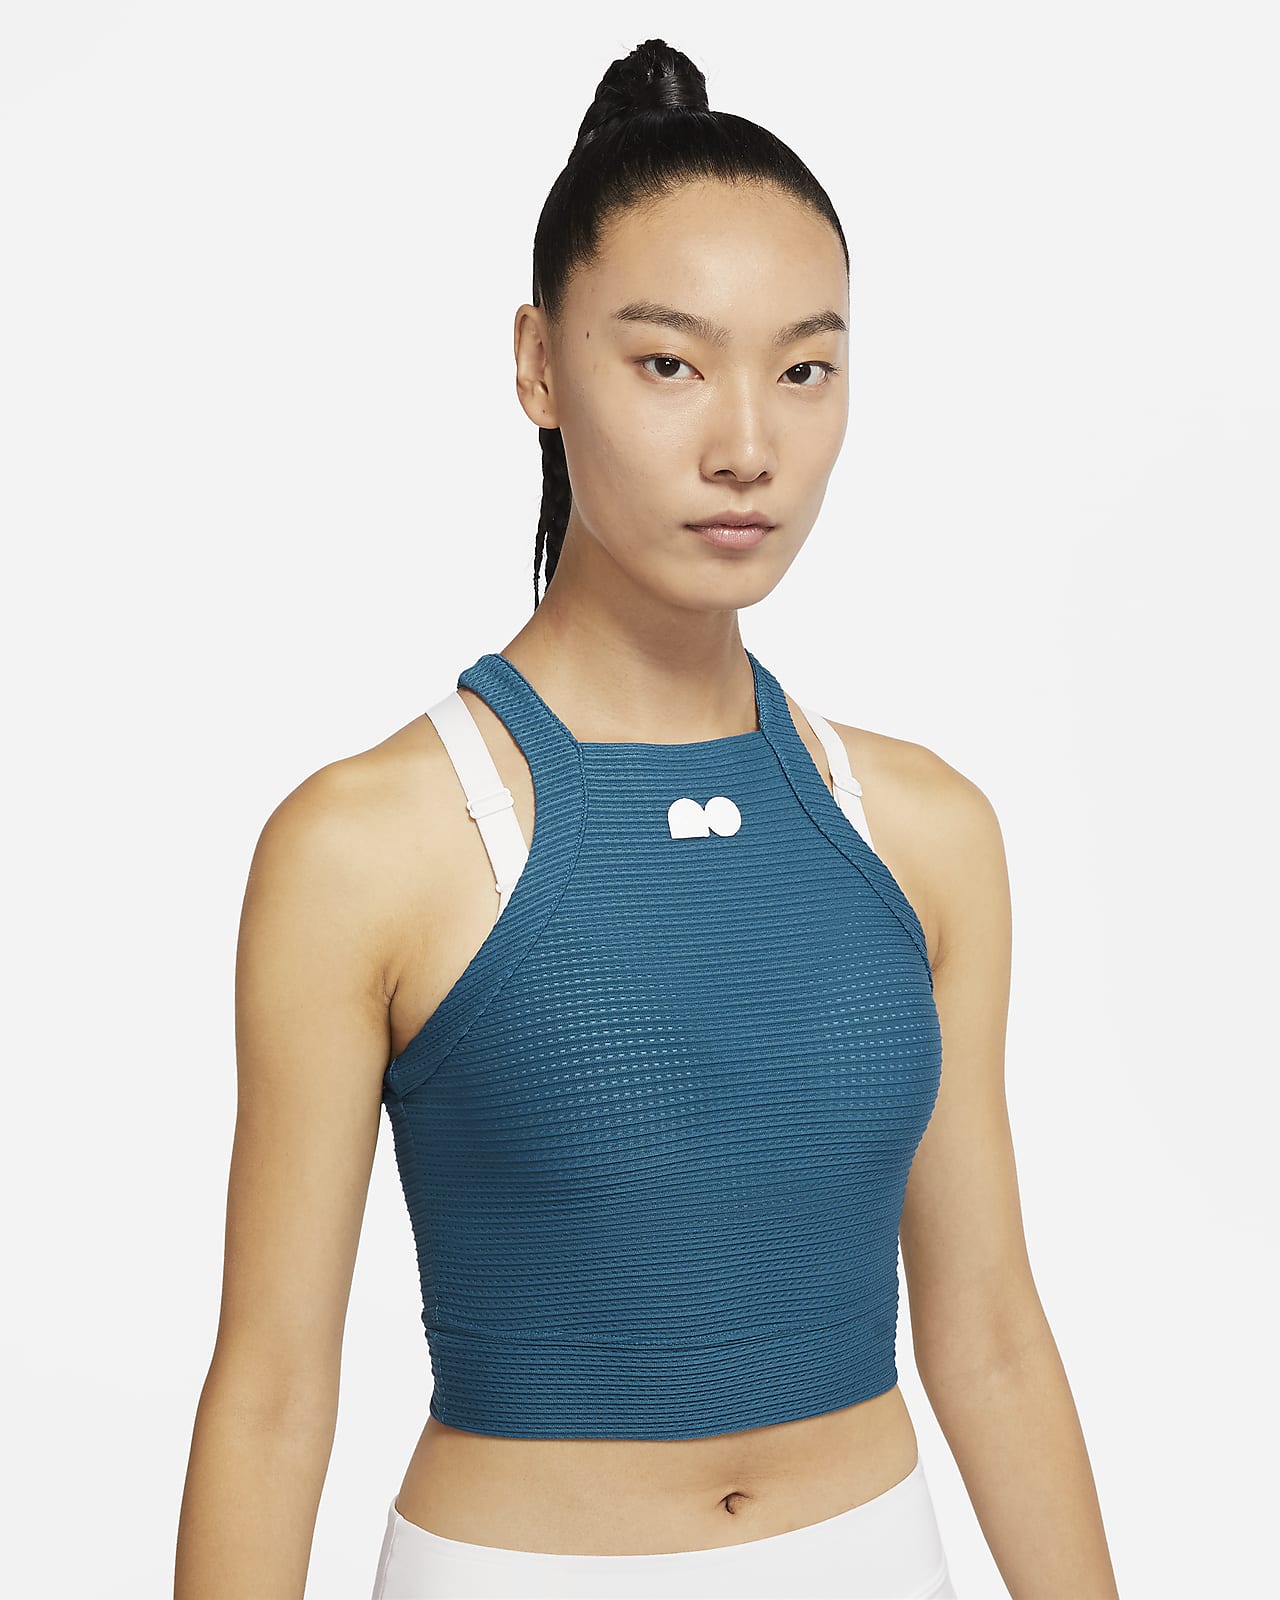 Naomi Osaka Collection Women's Cropped Tennis Top